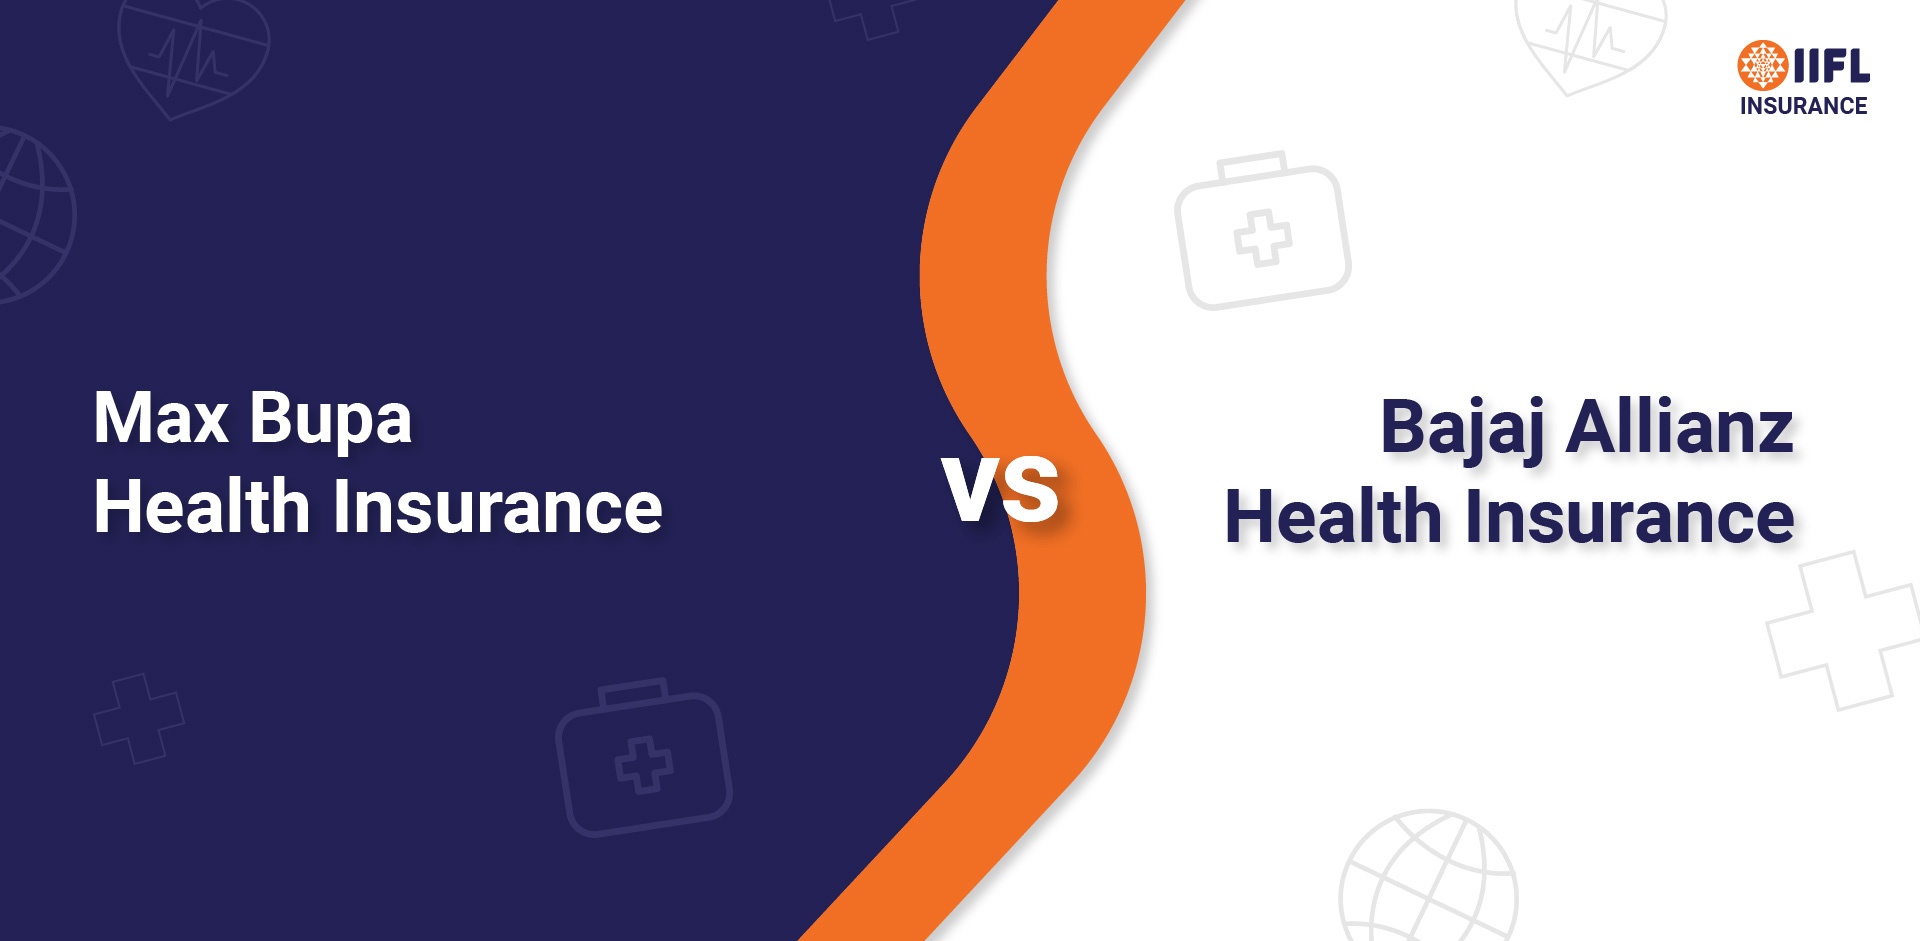 Niva Bupa (Max Bupa) Health Insurance vs Bajaj Allianz Health Insurance